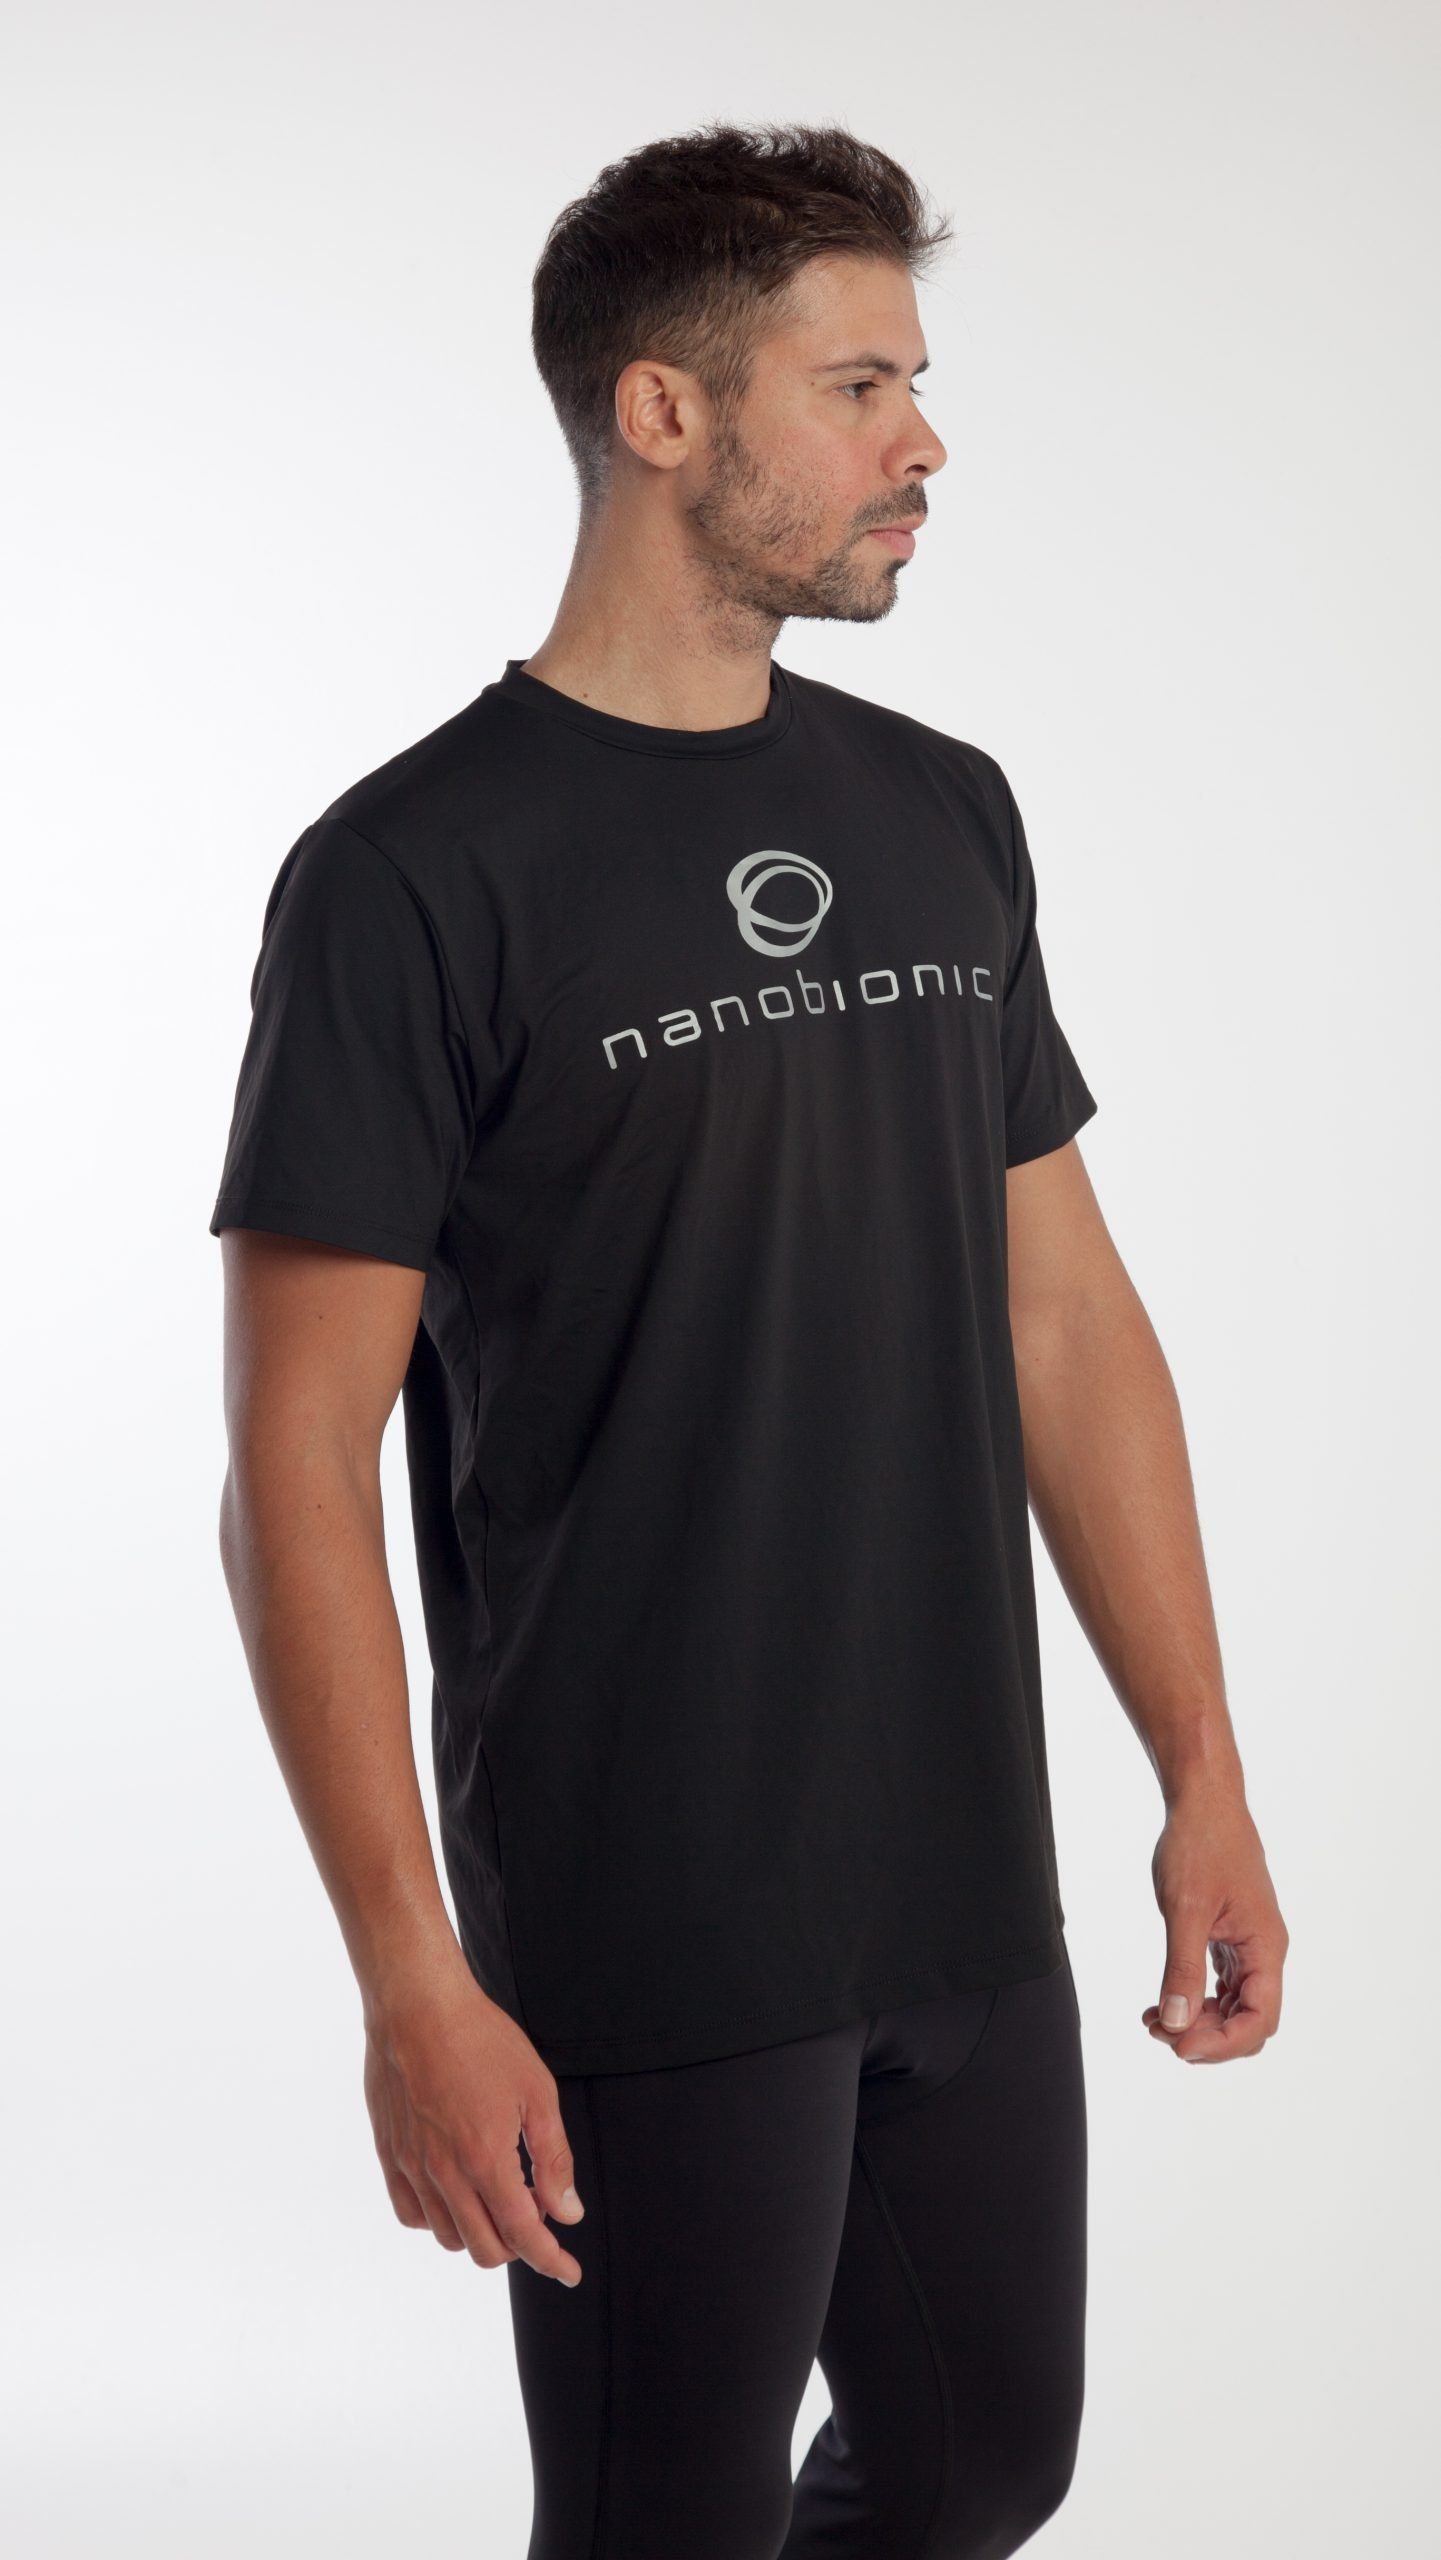 Iconic NANOBIONIC®-Technologie, exklusive NANOBIONIC® Award) T-shirt (schwarz/silber) NANOBIONIC® www.nanobionic.de und (Innovative I-Tech Energiequelle!!, NASA - Funktionsshirt nahezu endlose Nanobionic® eine